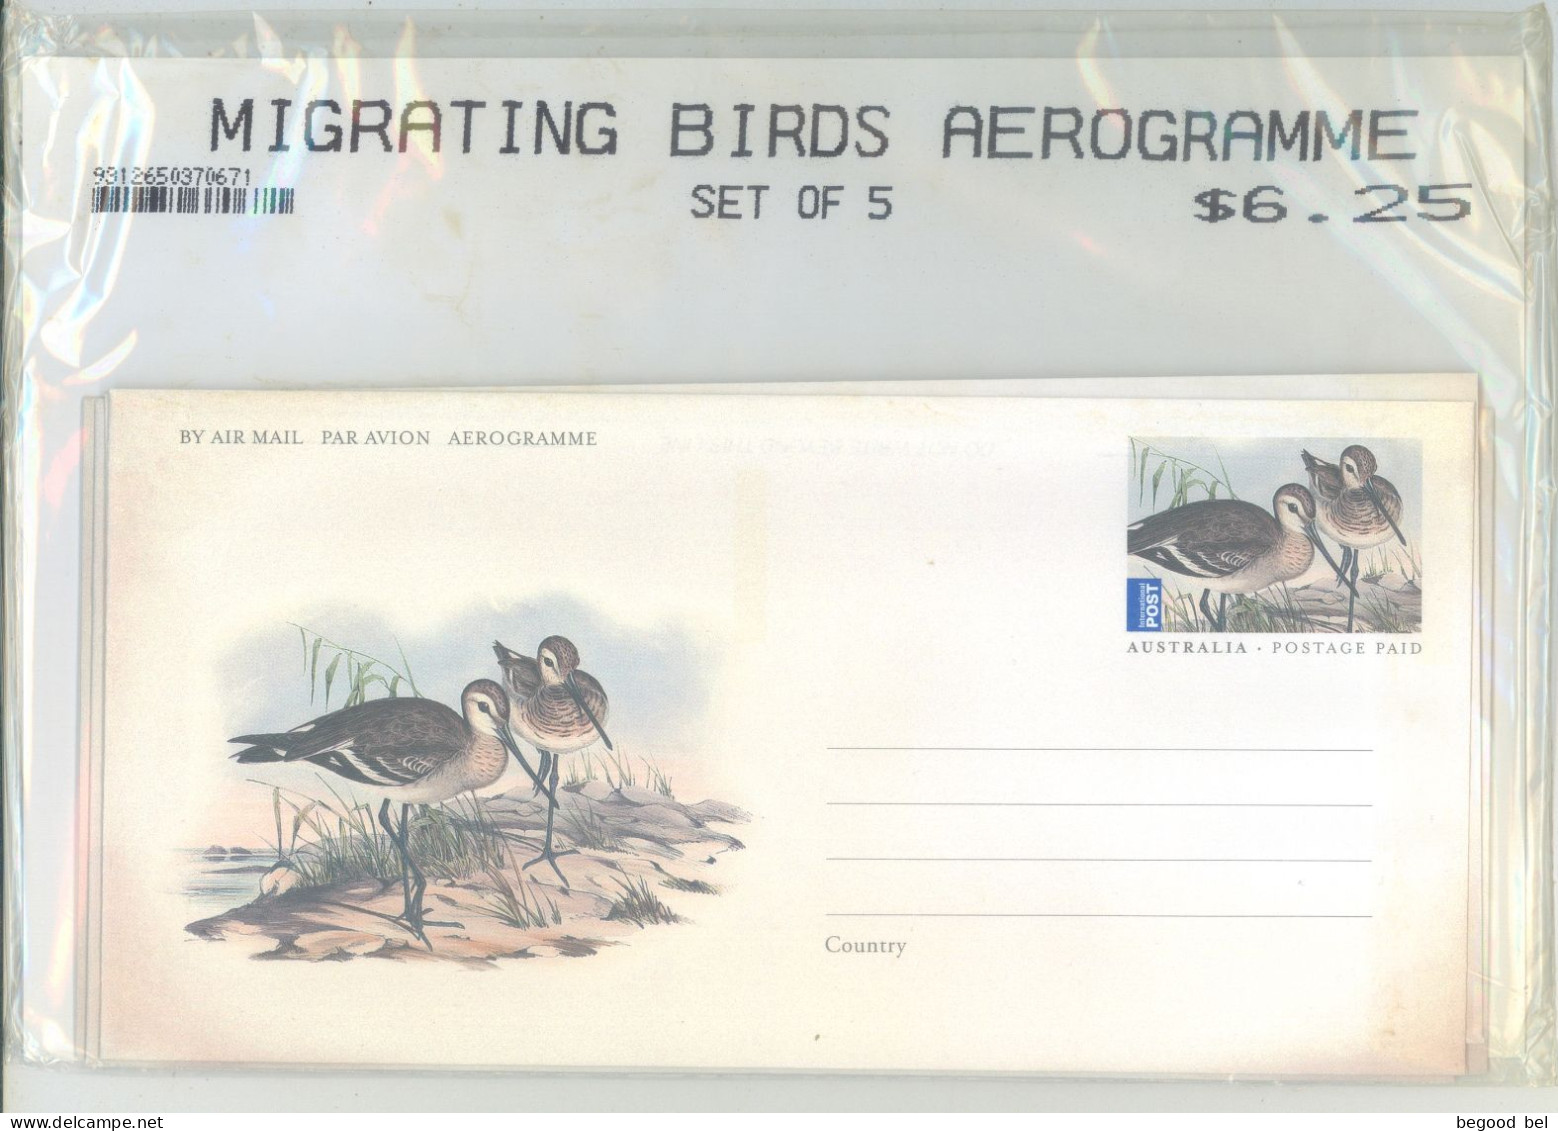 AUSTRALIA - AEROGRAMME COMPLETE SET OF 5 IN THE ORIGINAL ENCLOSED PACKAGING - 2009 - MIGRATING BIRDS -  Lot 25752 - Aerogrammi